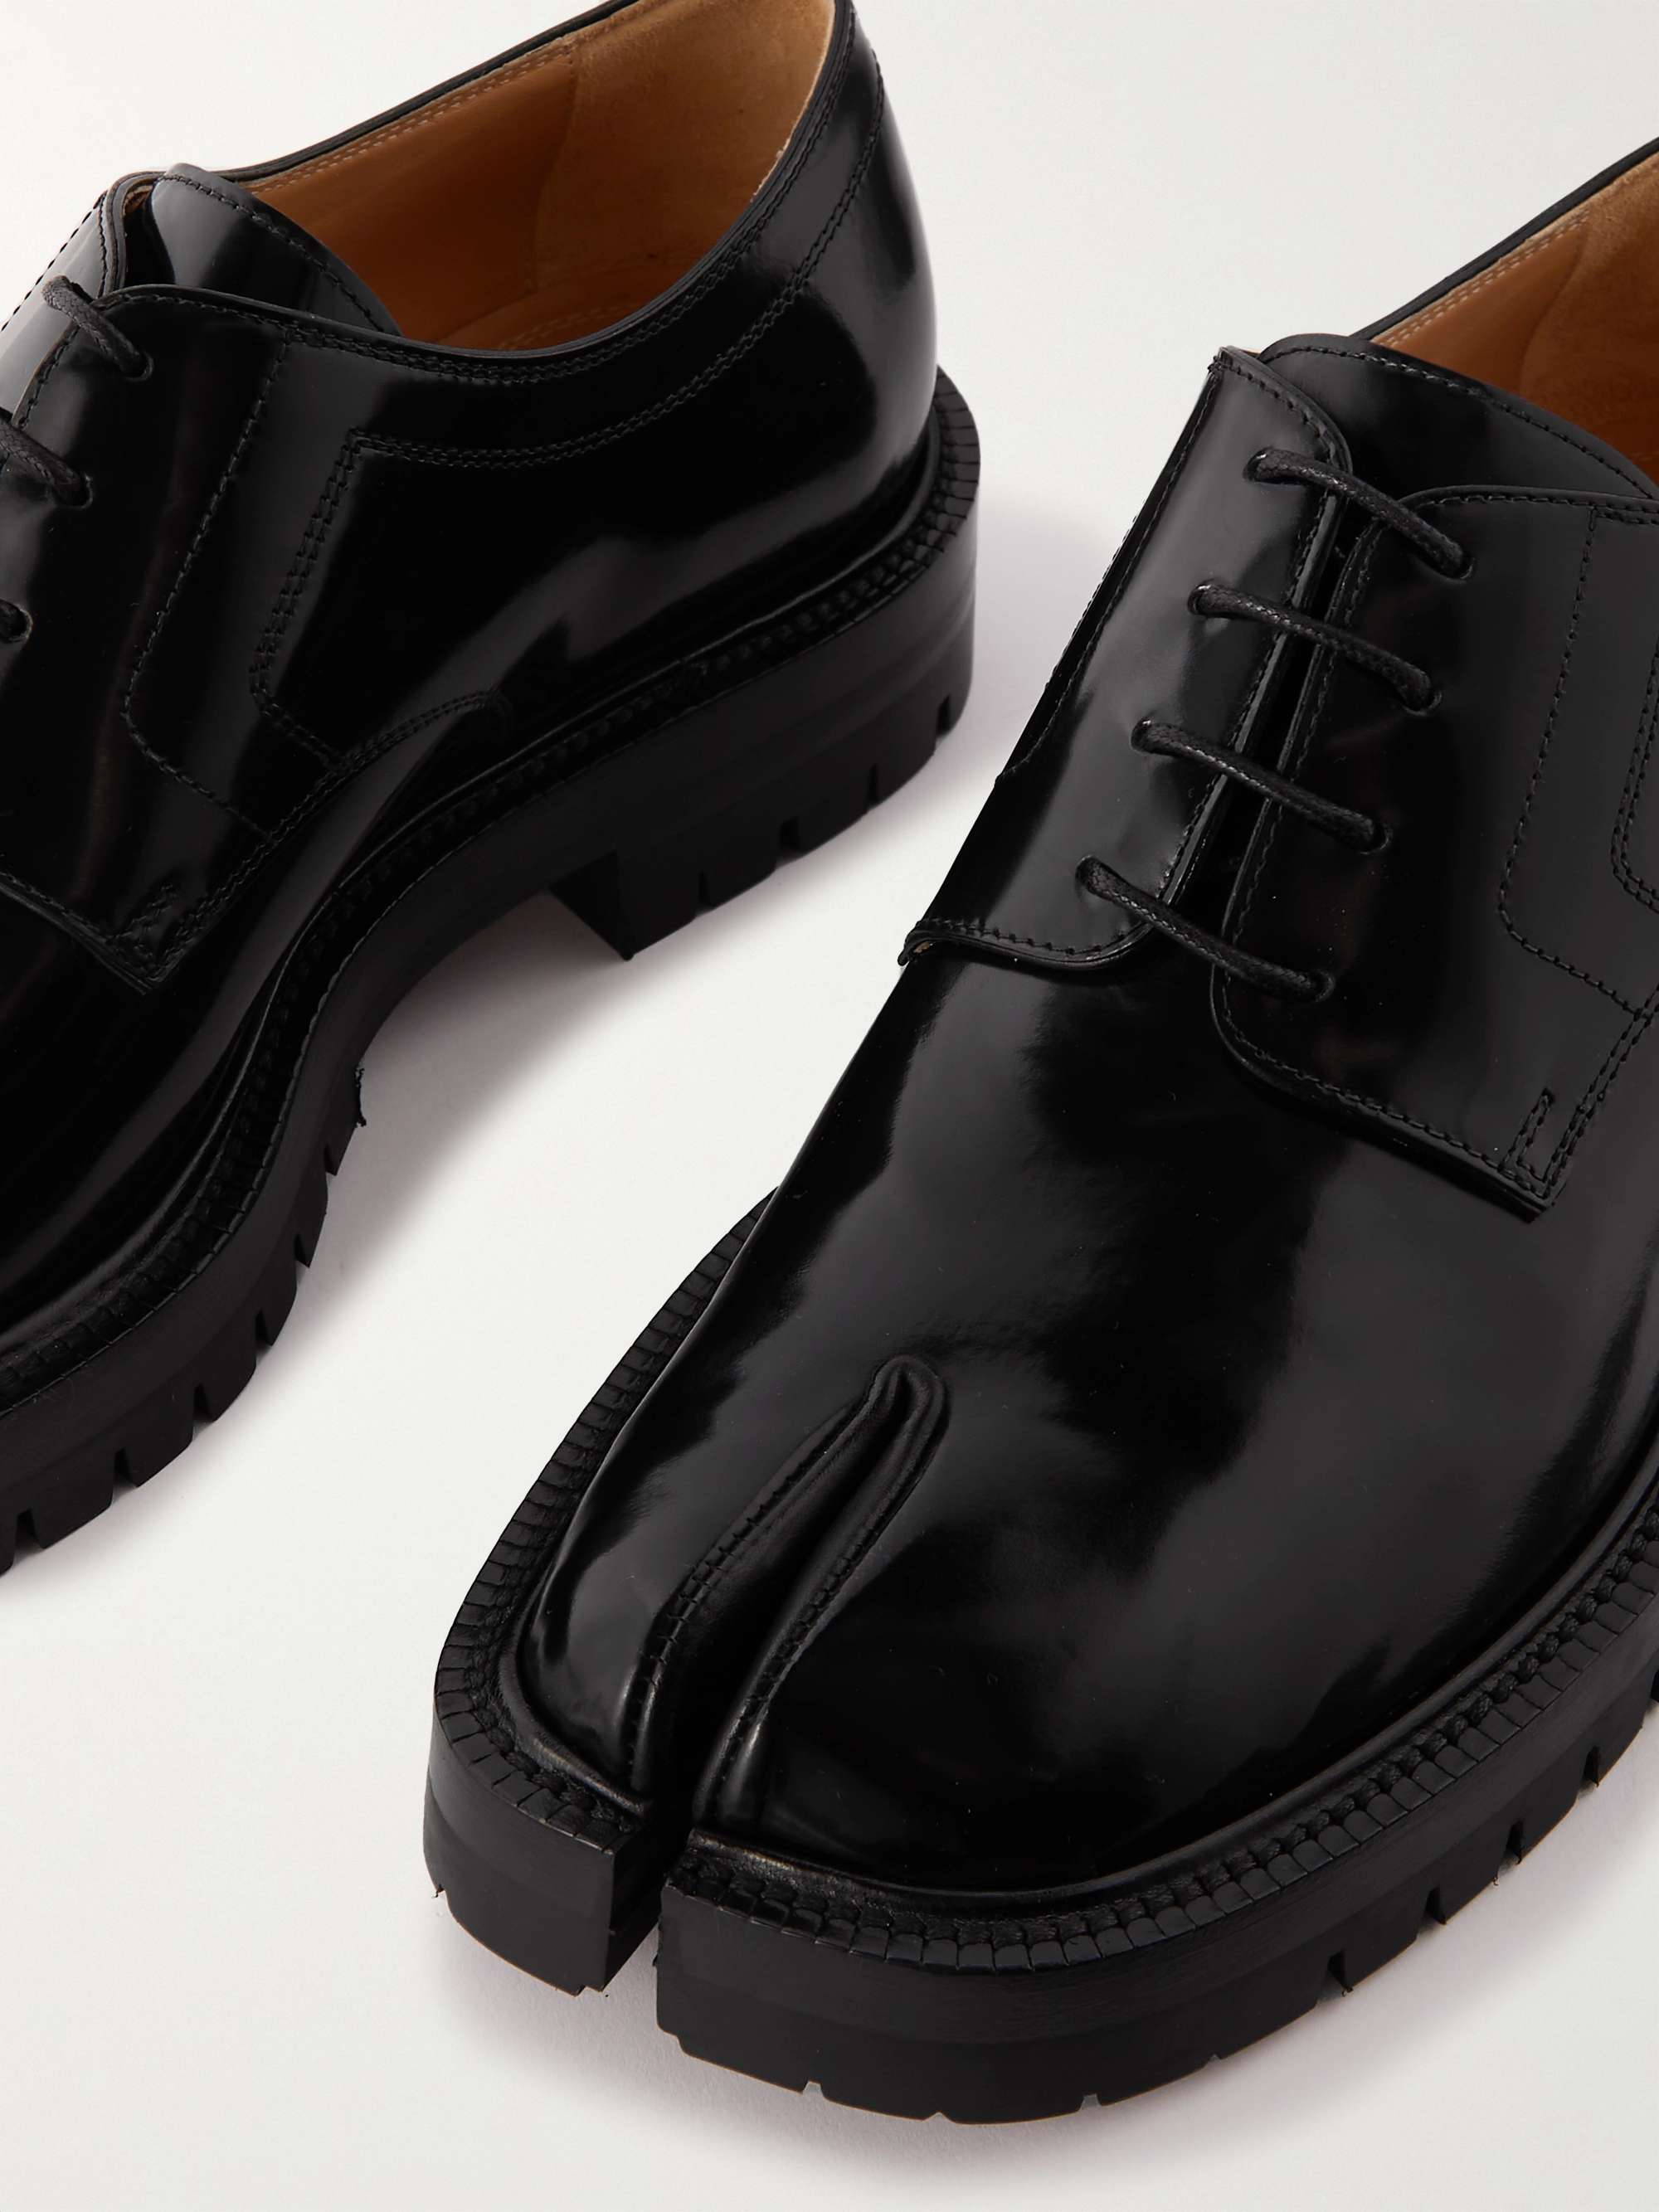 MAISON MARGIELA Tabi Split-Toe Polished-Leather Derby Shoes for Men ...